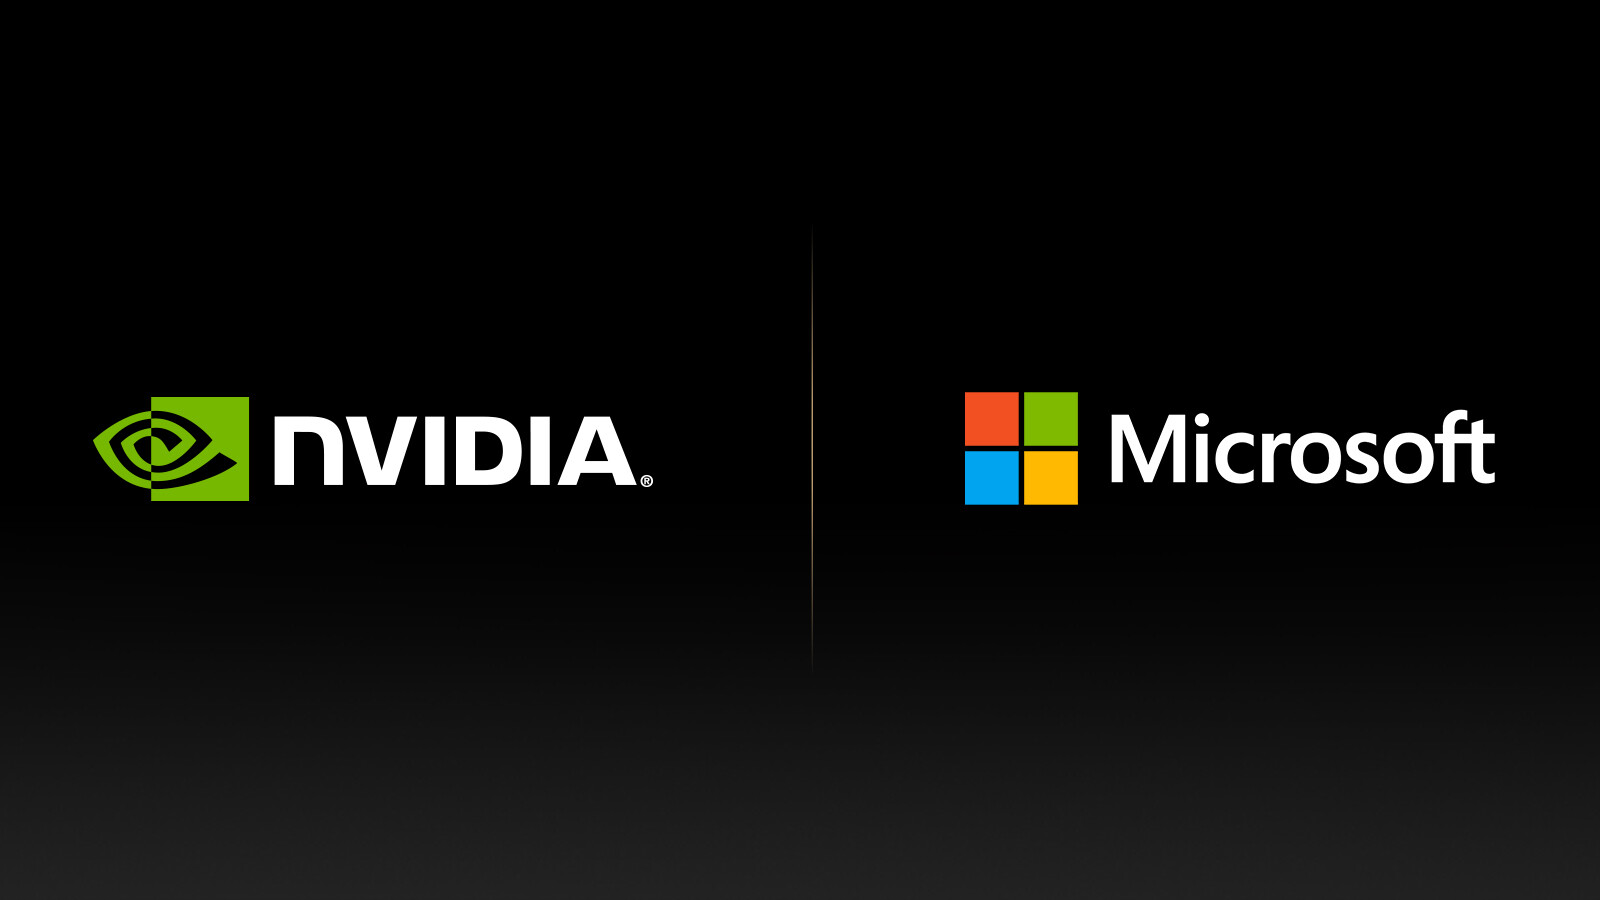 NVIDIA y Microsoft anuncian grandes integraciones para IA generativa